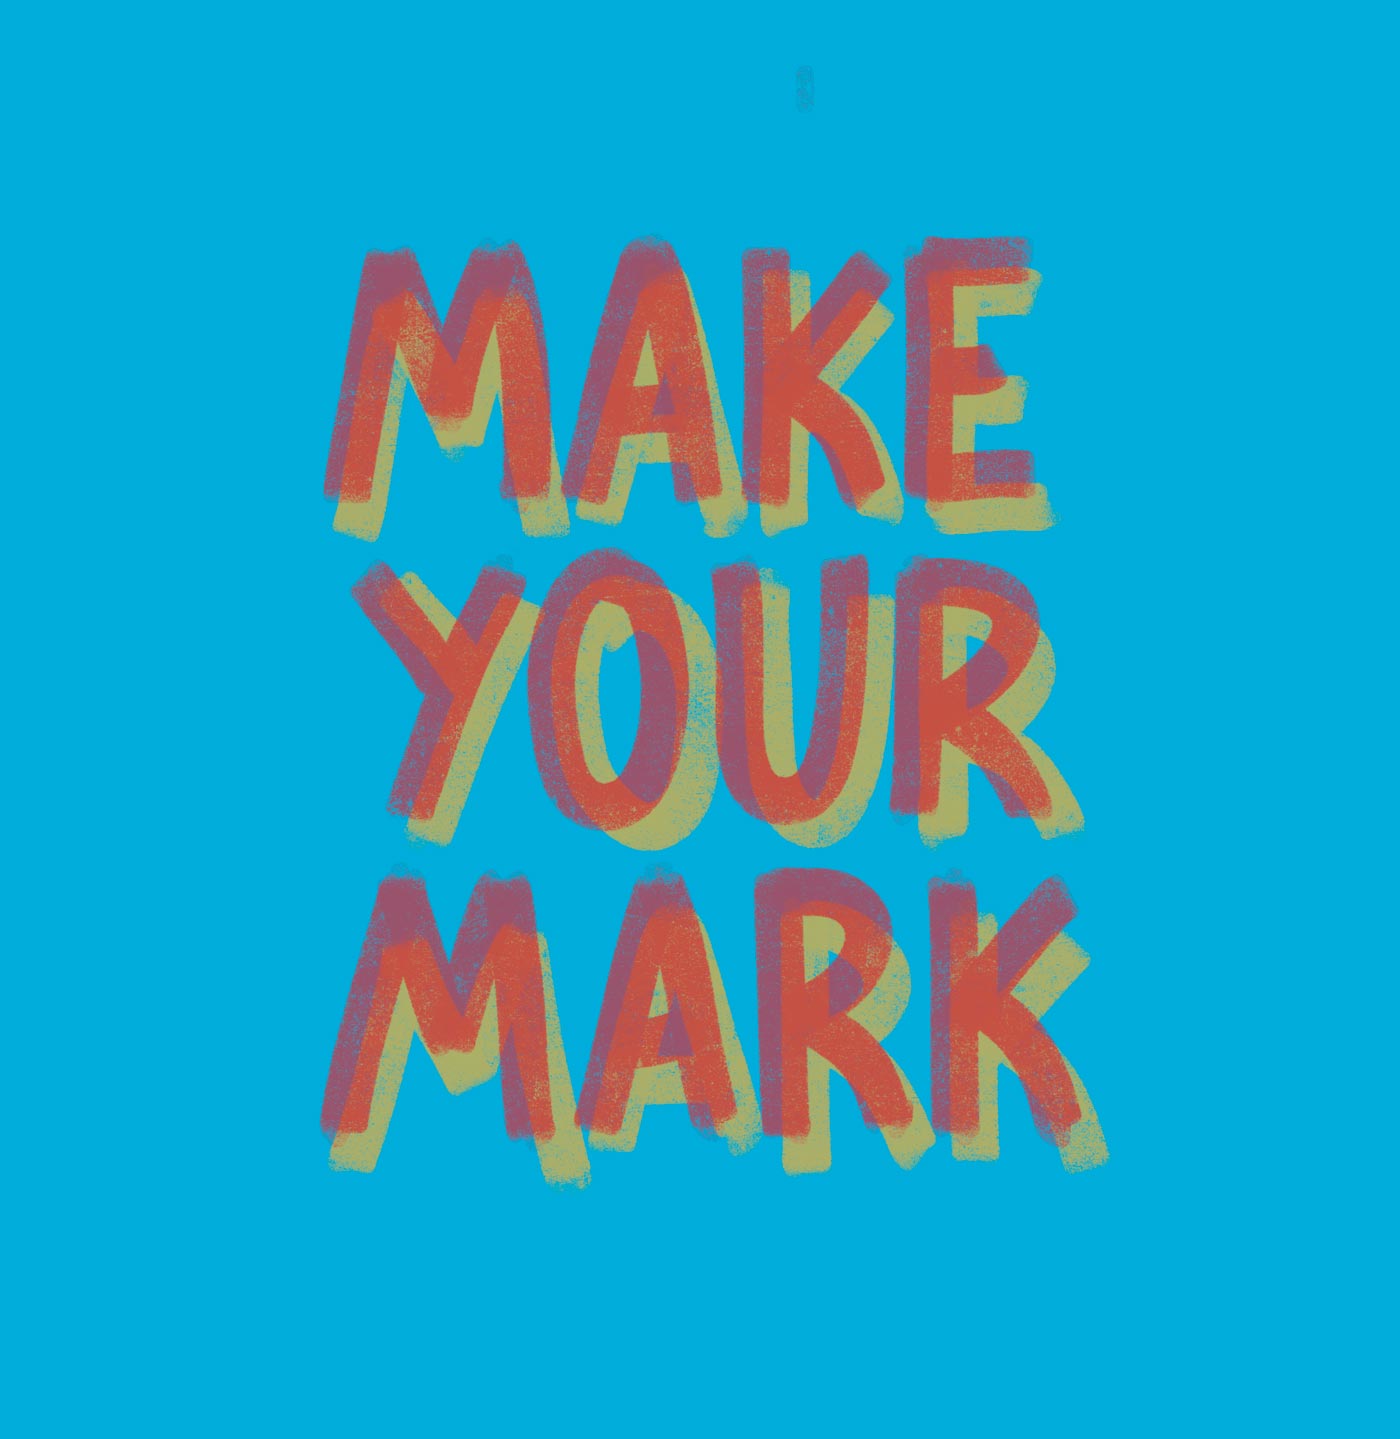 Make your mark